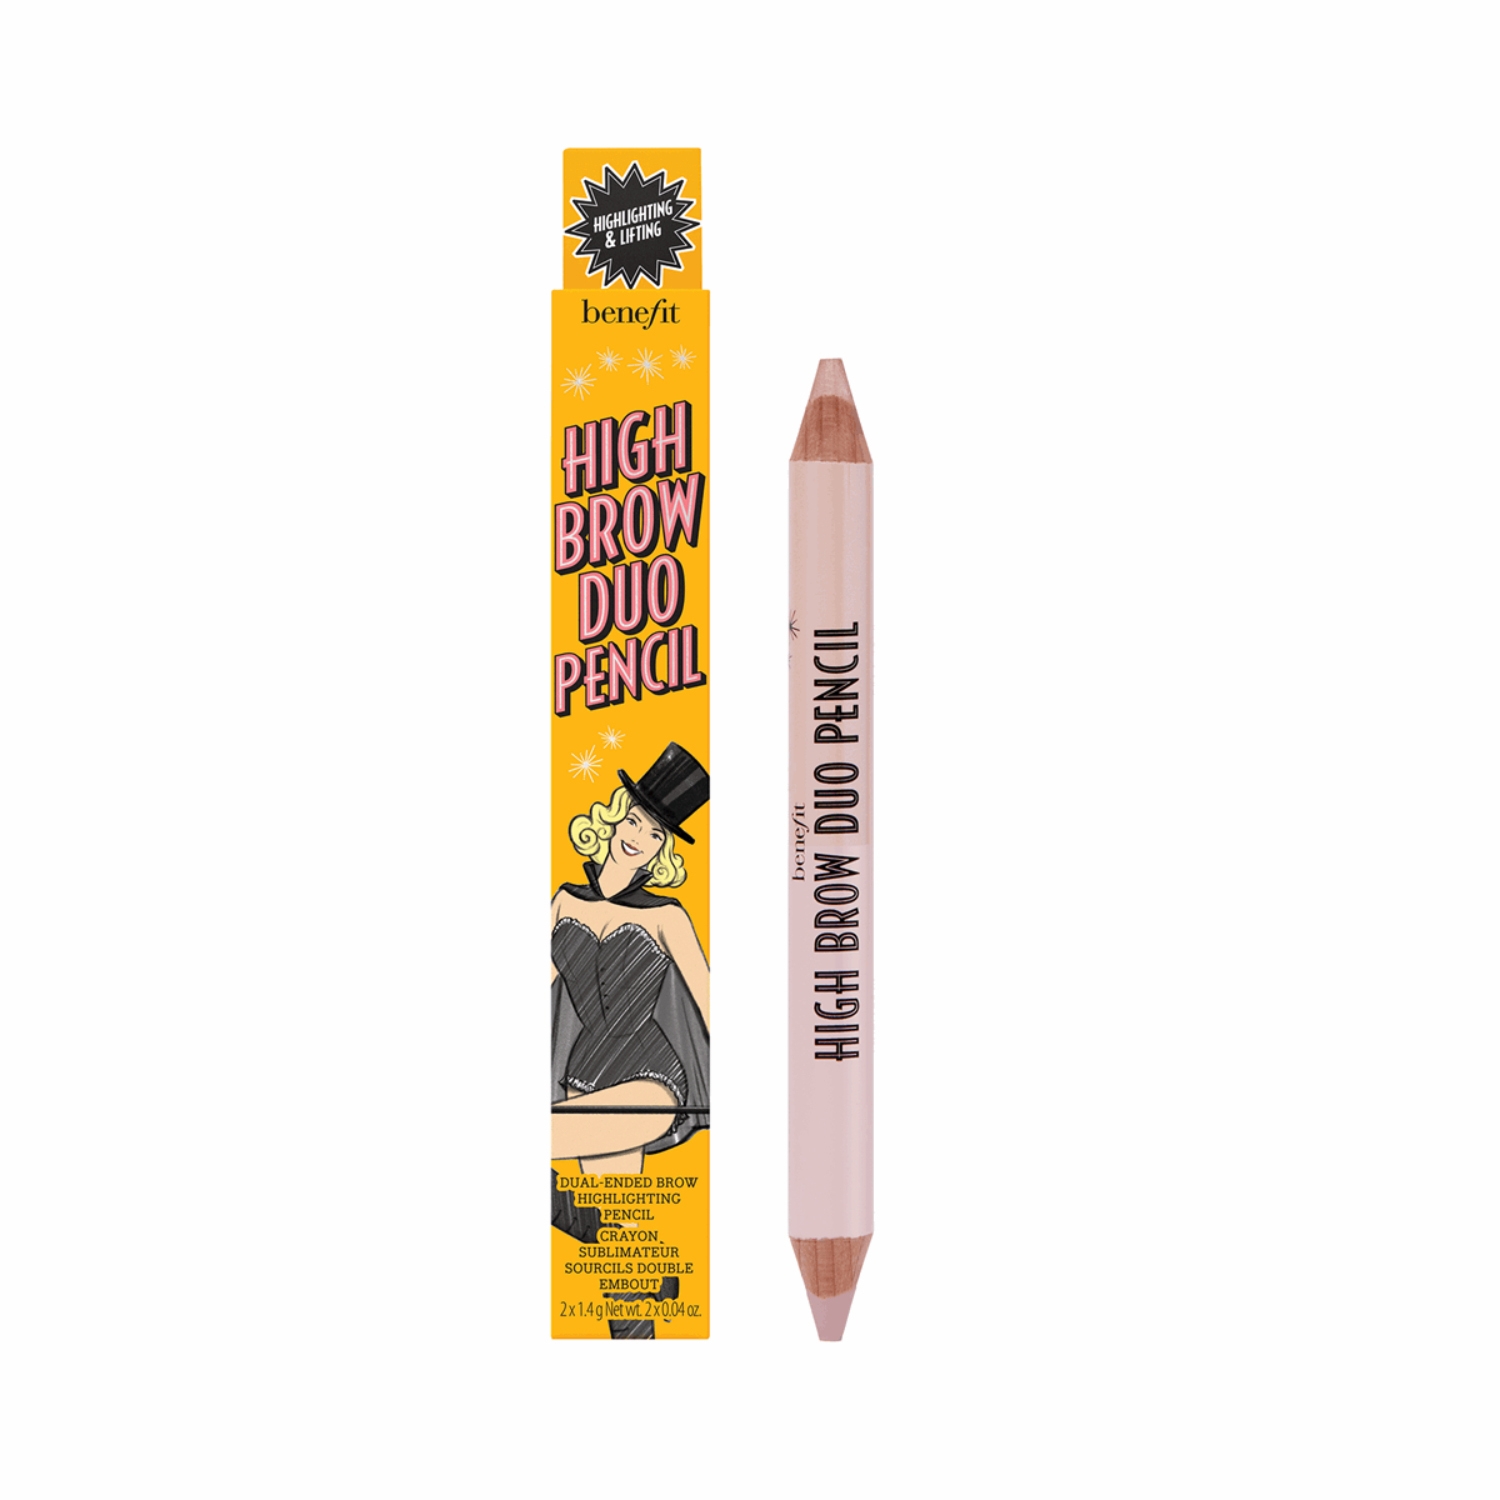 Benefit Cosmetics | Benefit Cosmetics High Brow Duo Pencil Set - Linen Pink and Soft Gold (2 pcs)